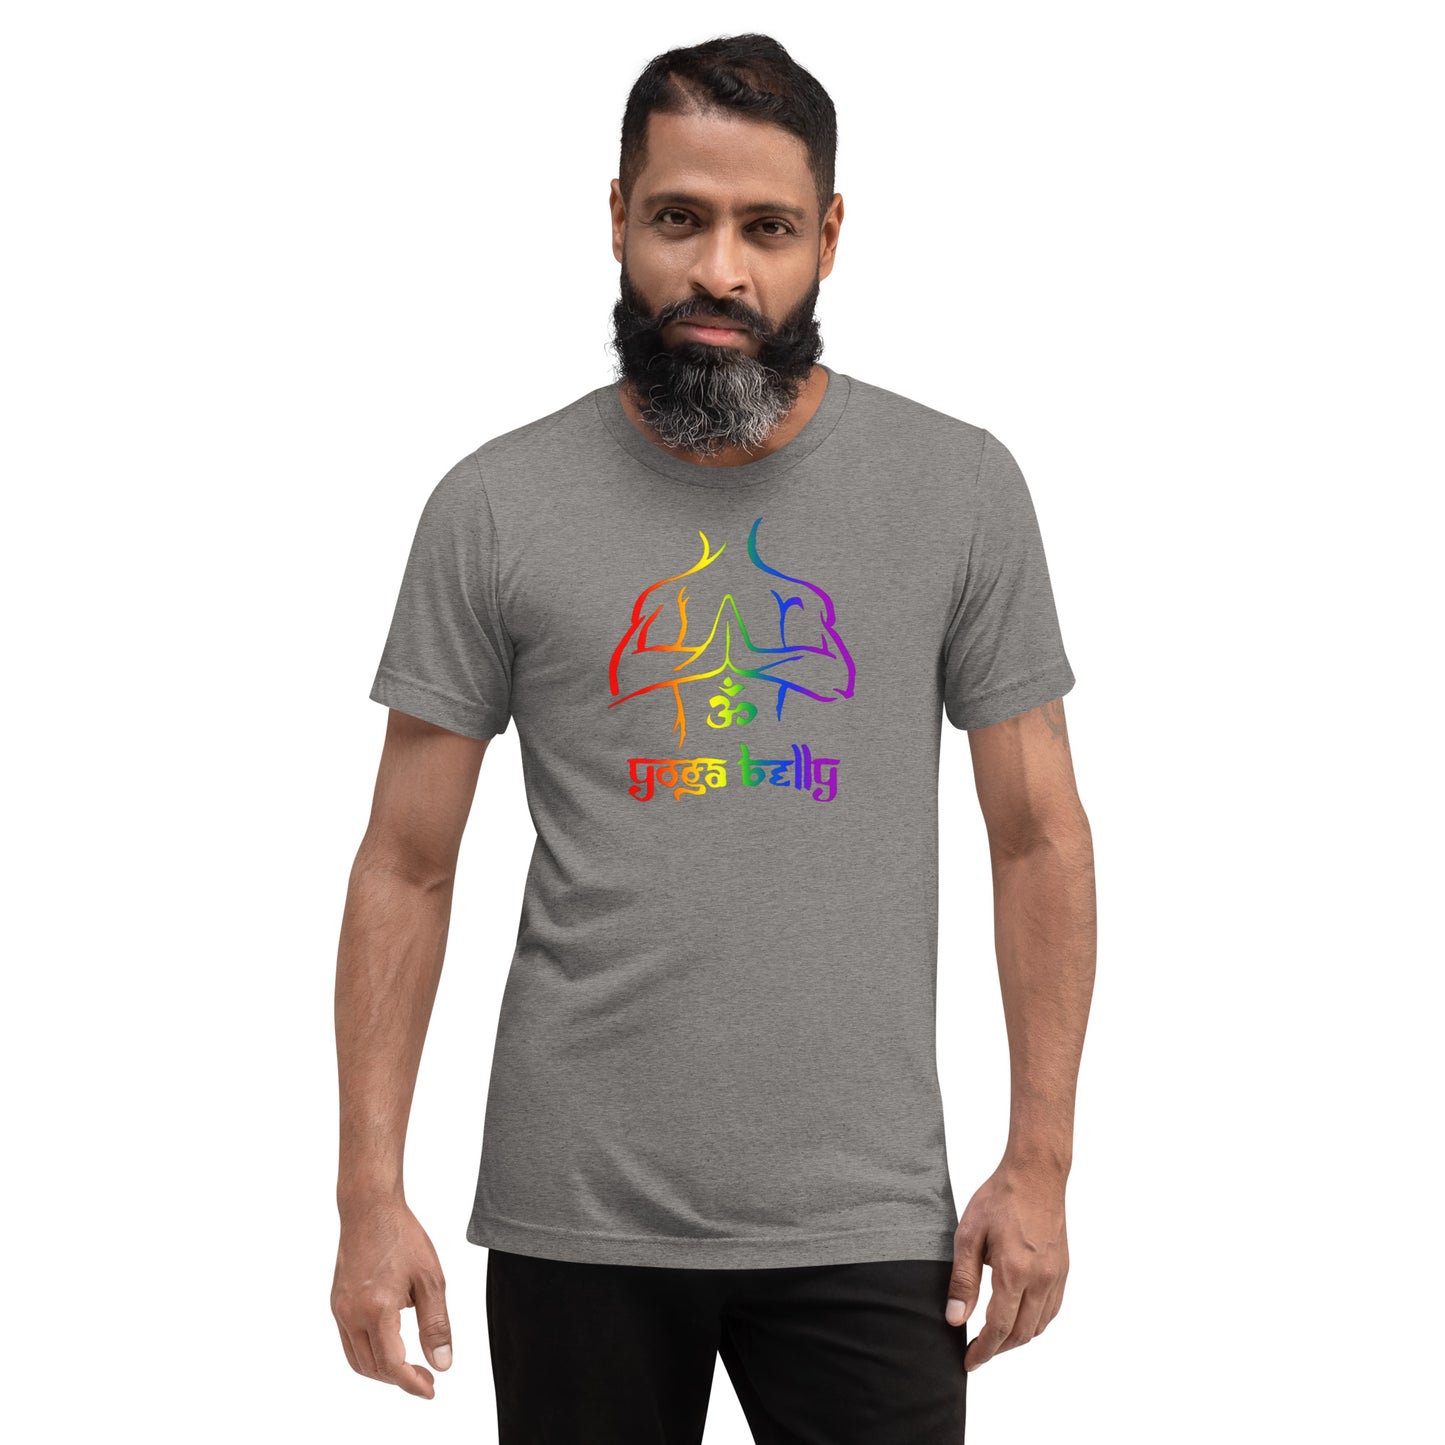 Yoga Belly Rainbow Short sleeve t-shirt